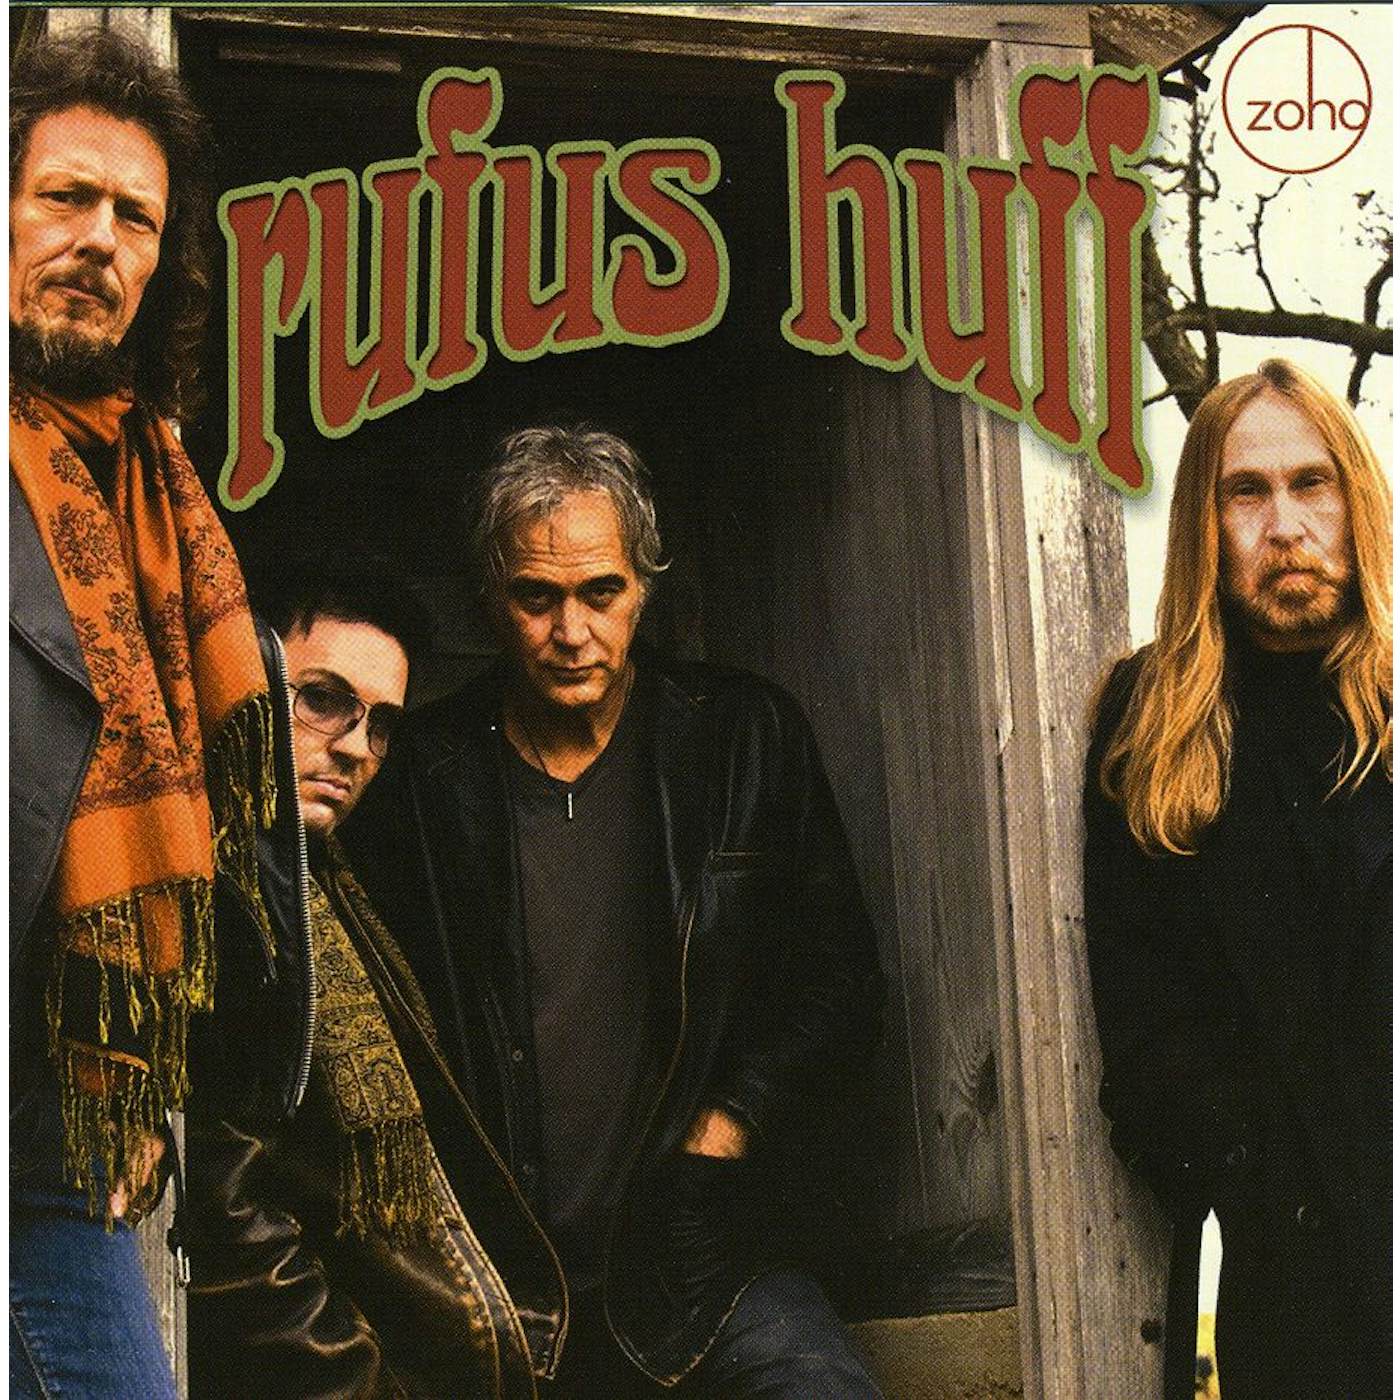 RUFUS HUFF CD